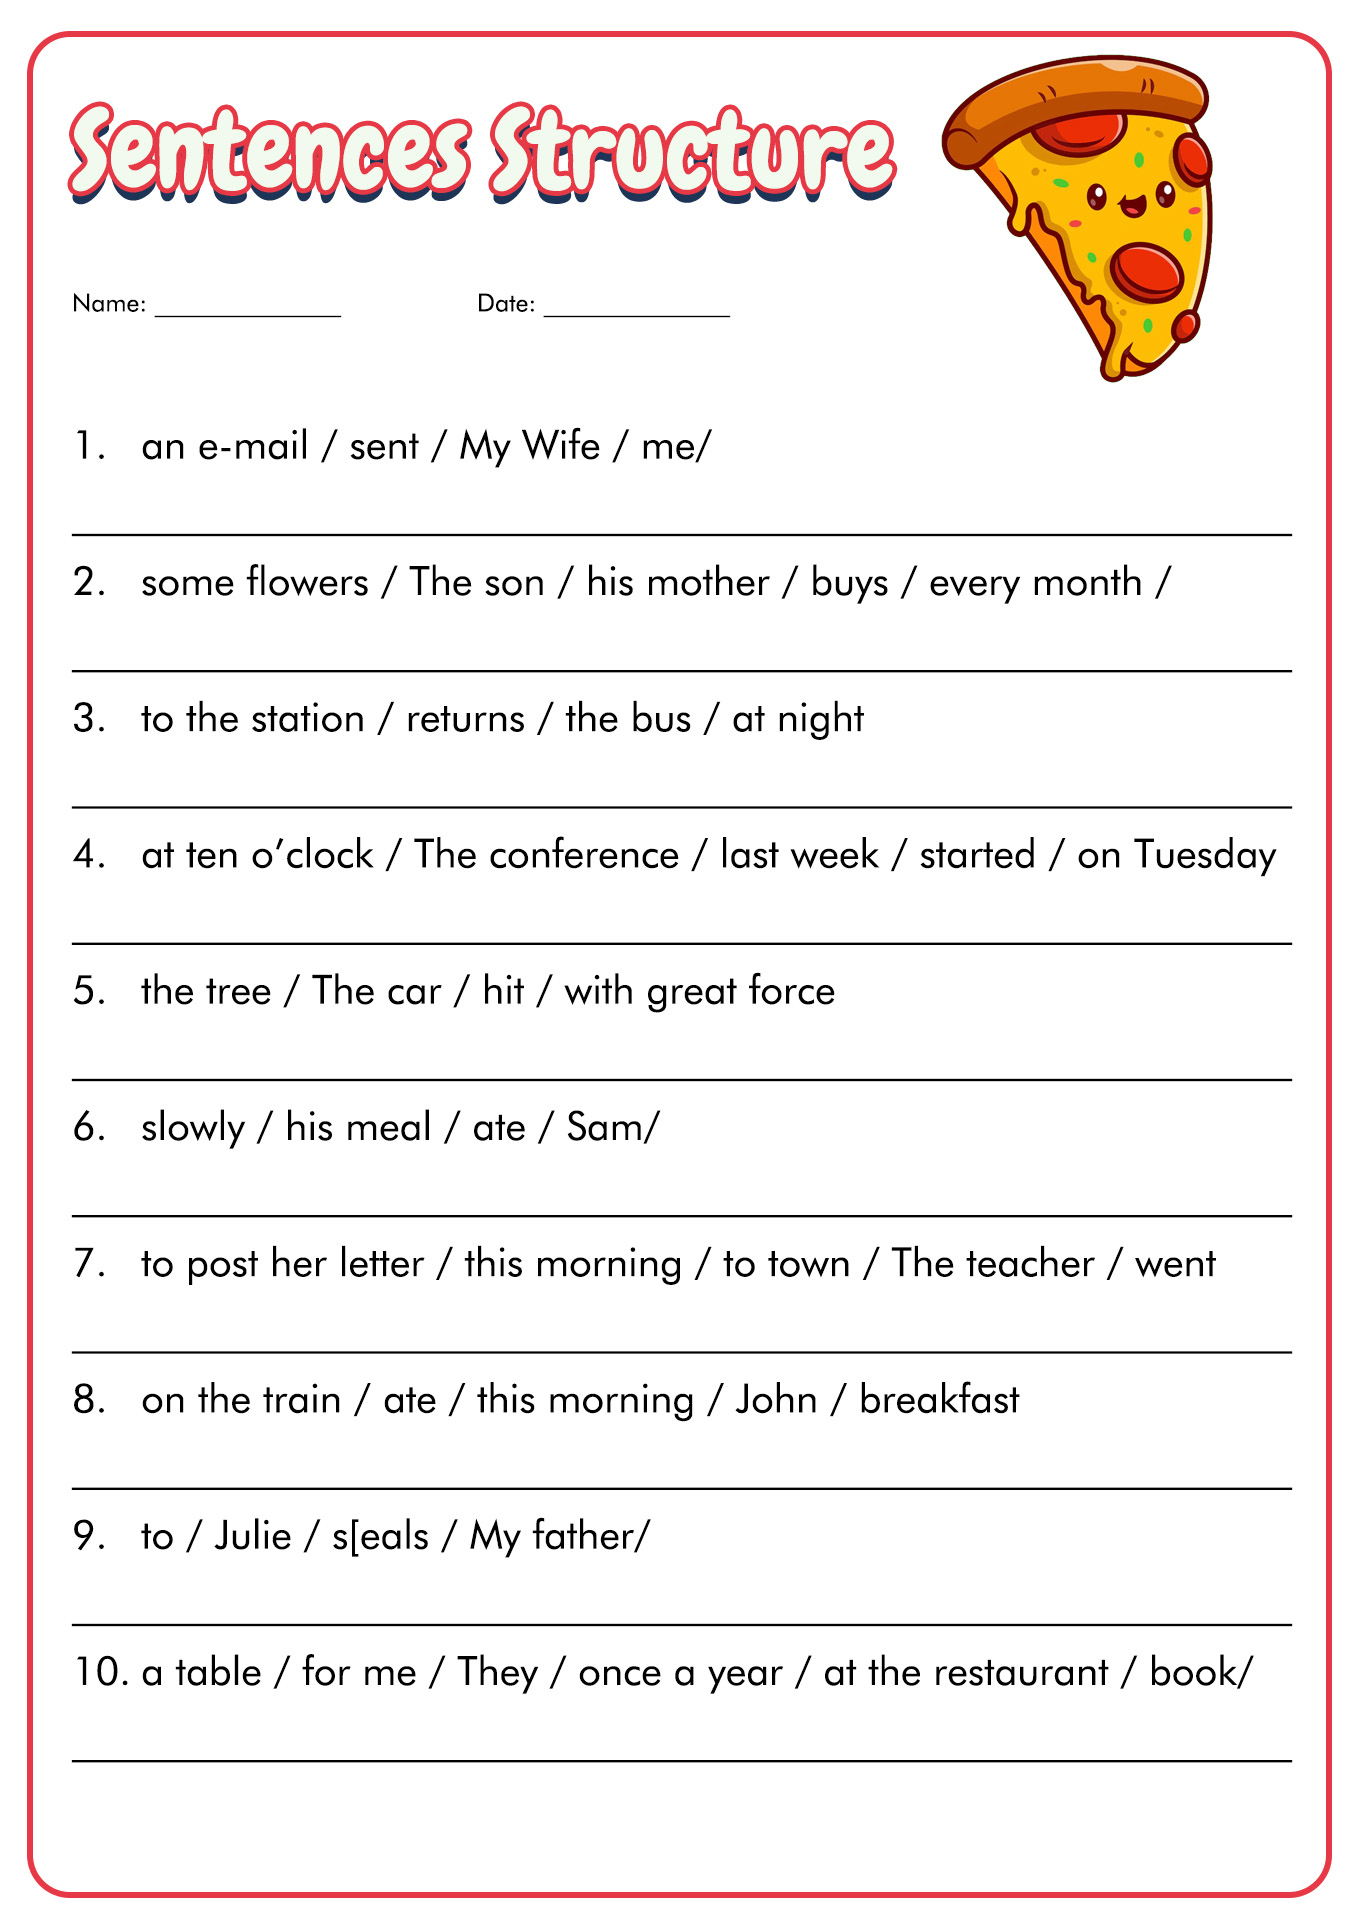 Printable Grammar Worksheets Sentence Types Image